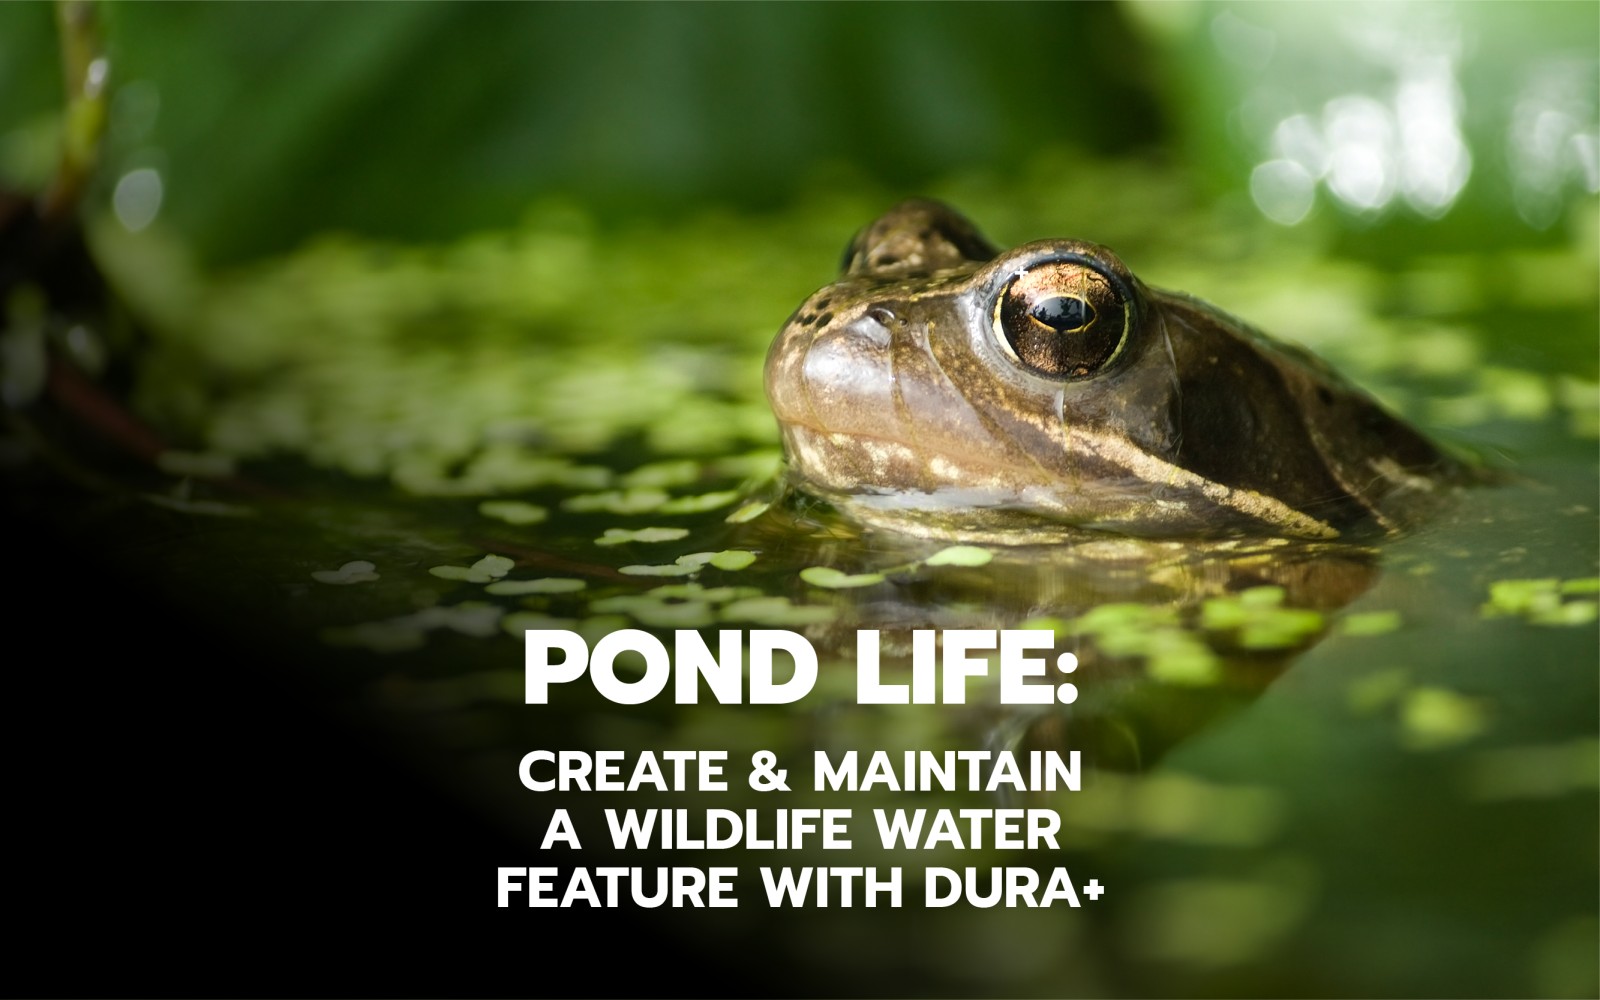 Create a wildlife pond with DURA+